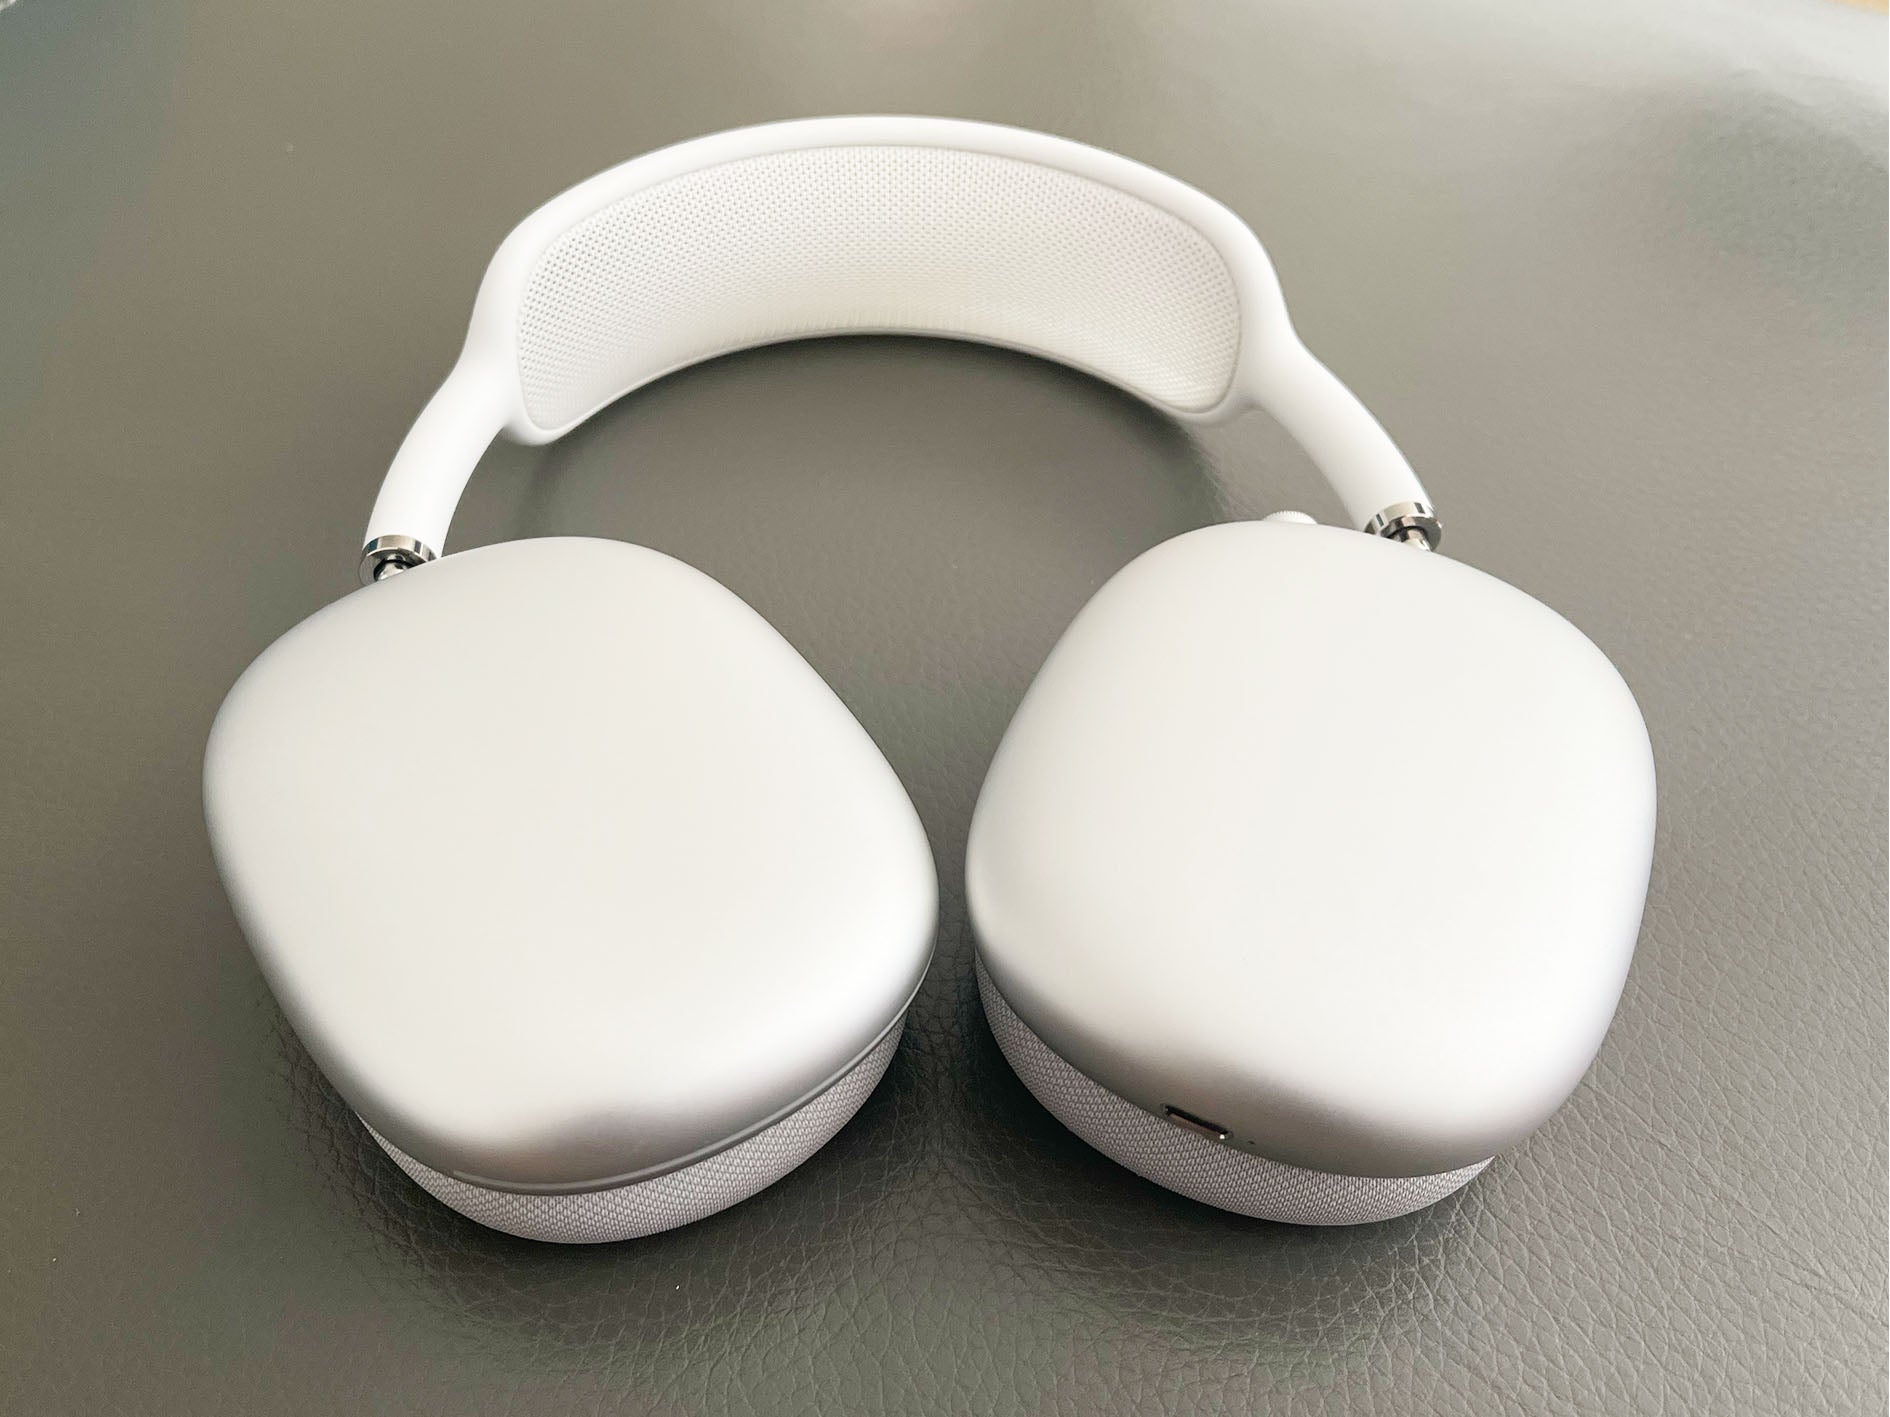 15 Best Bluetooth Wireless Headphones & Earbuds